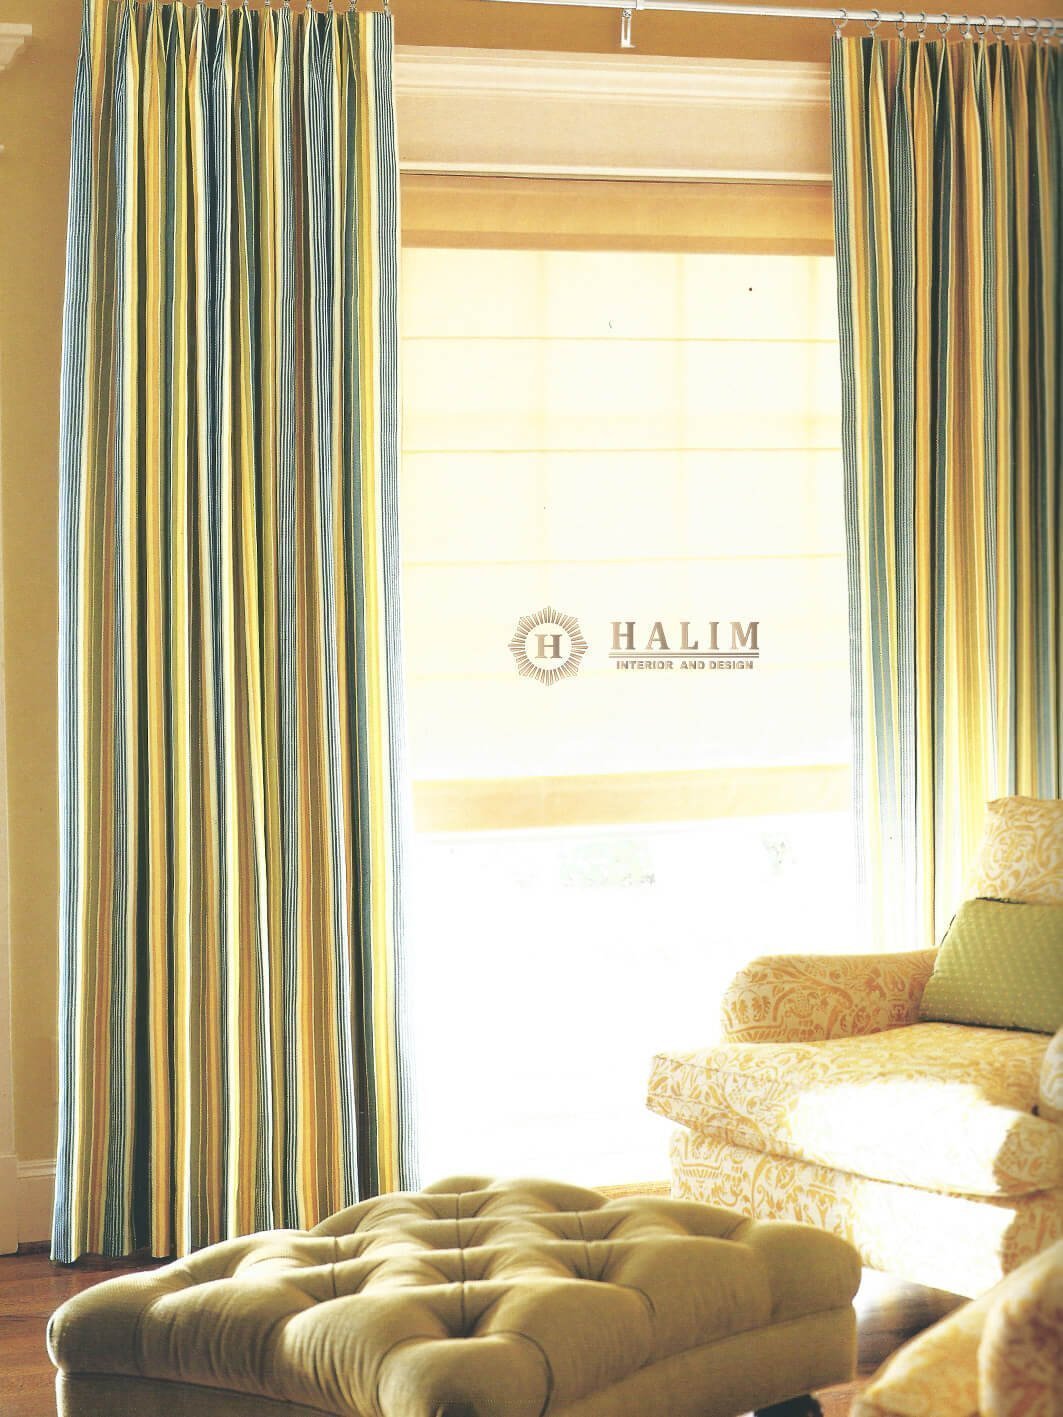 Halim Interior modern furniture contemporer american style minimalist european classic surabaya Curtain 3 1 1